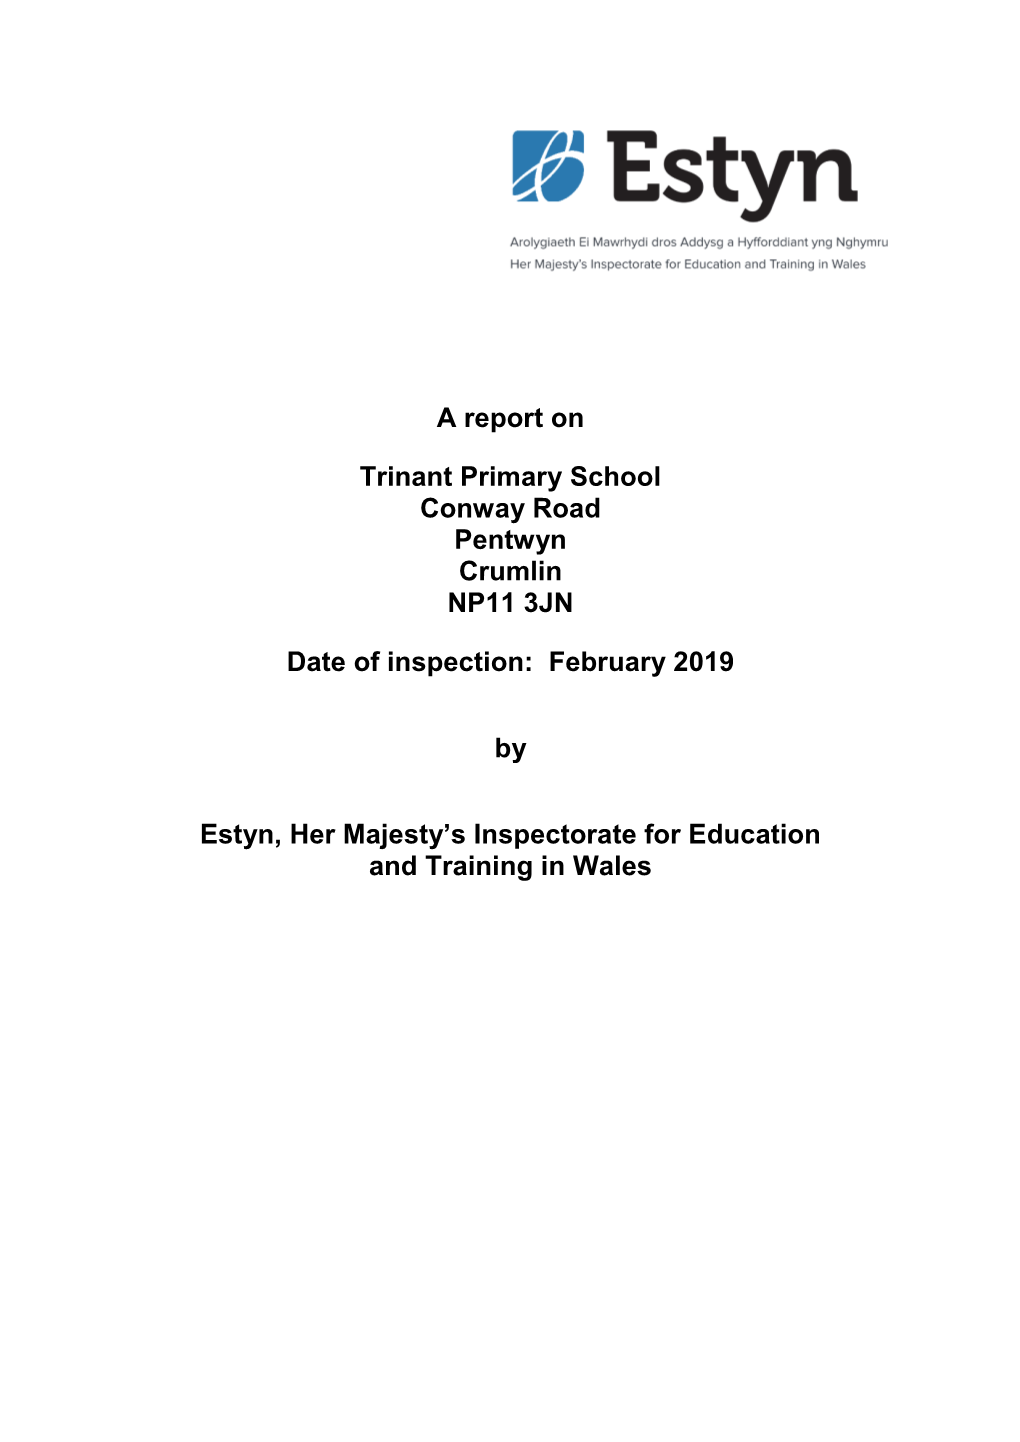 Inspection Report Trinant Primary School 2019